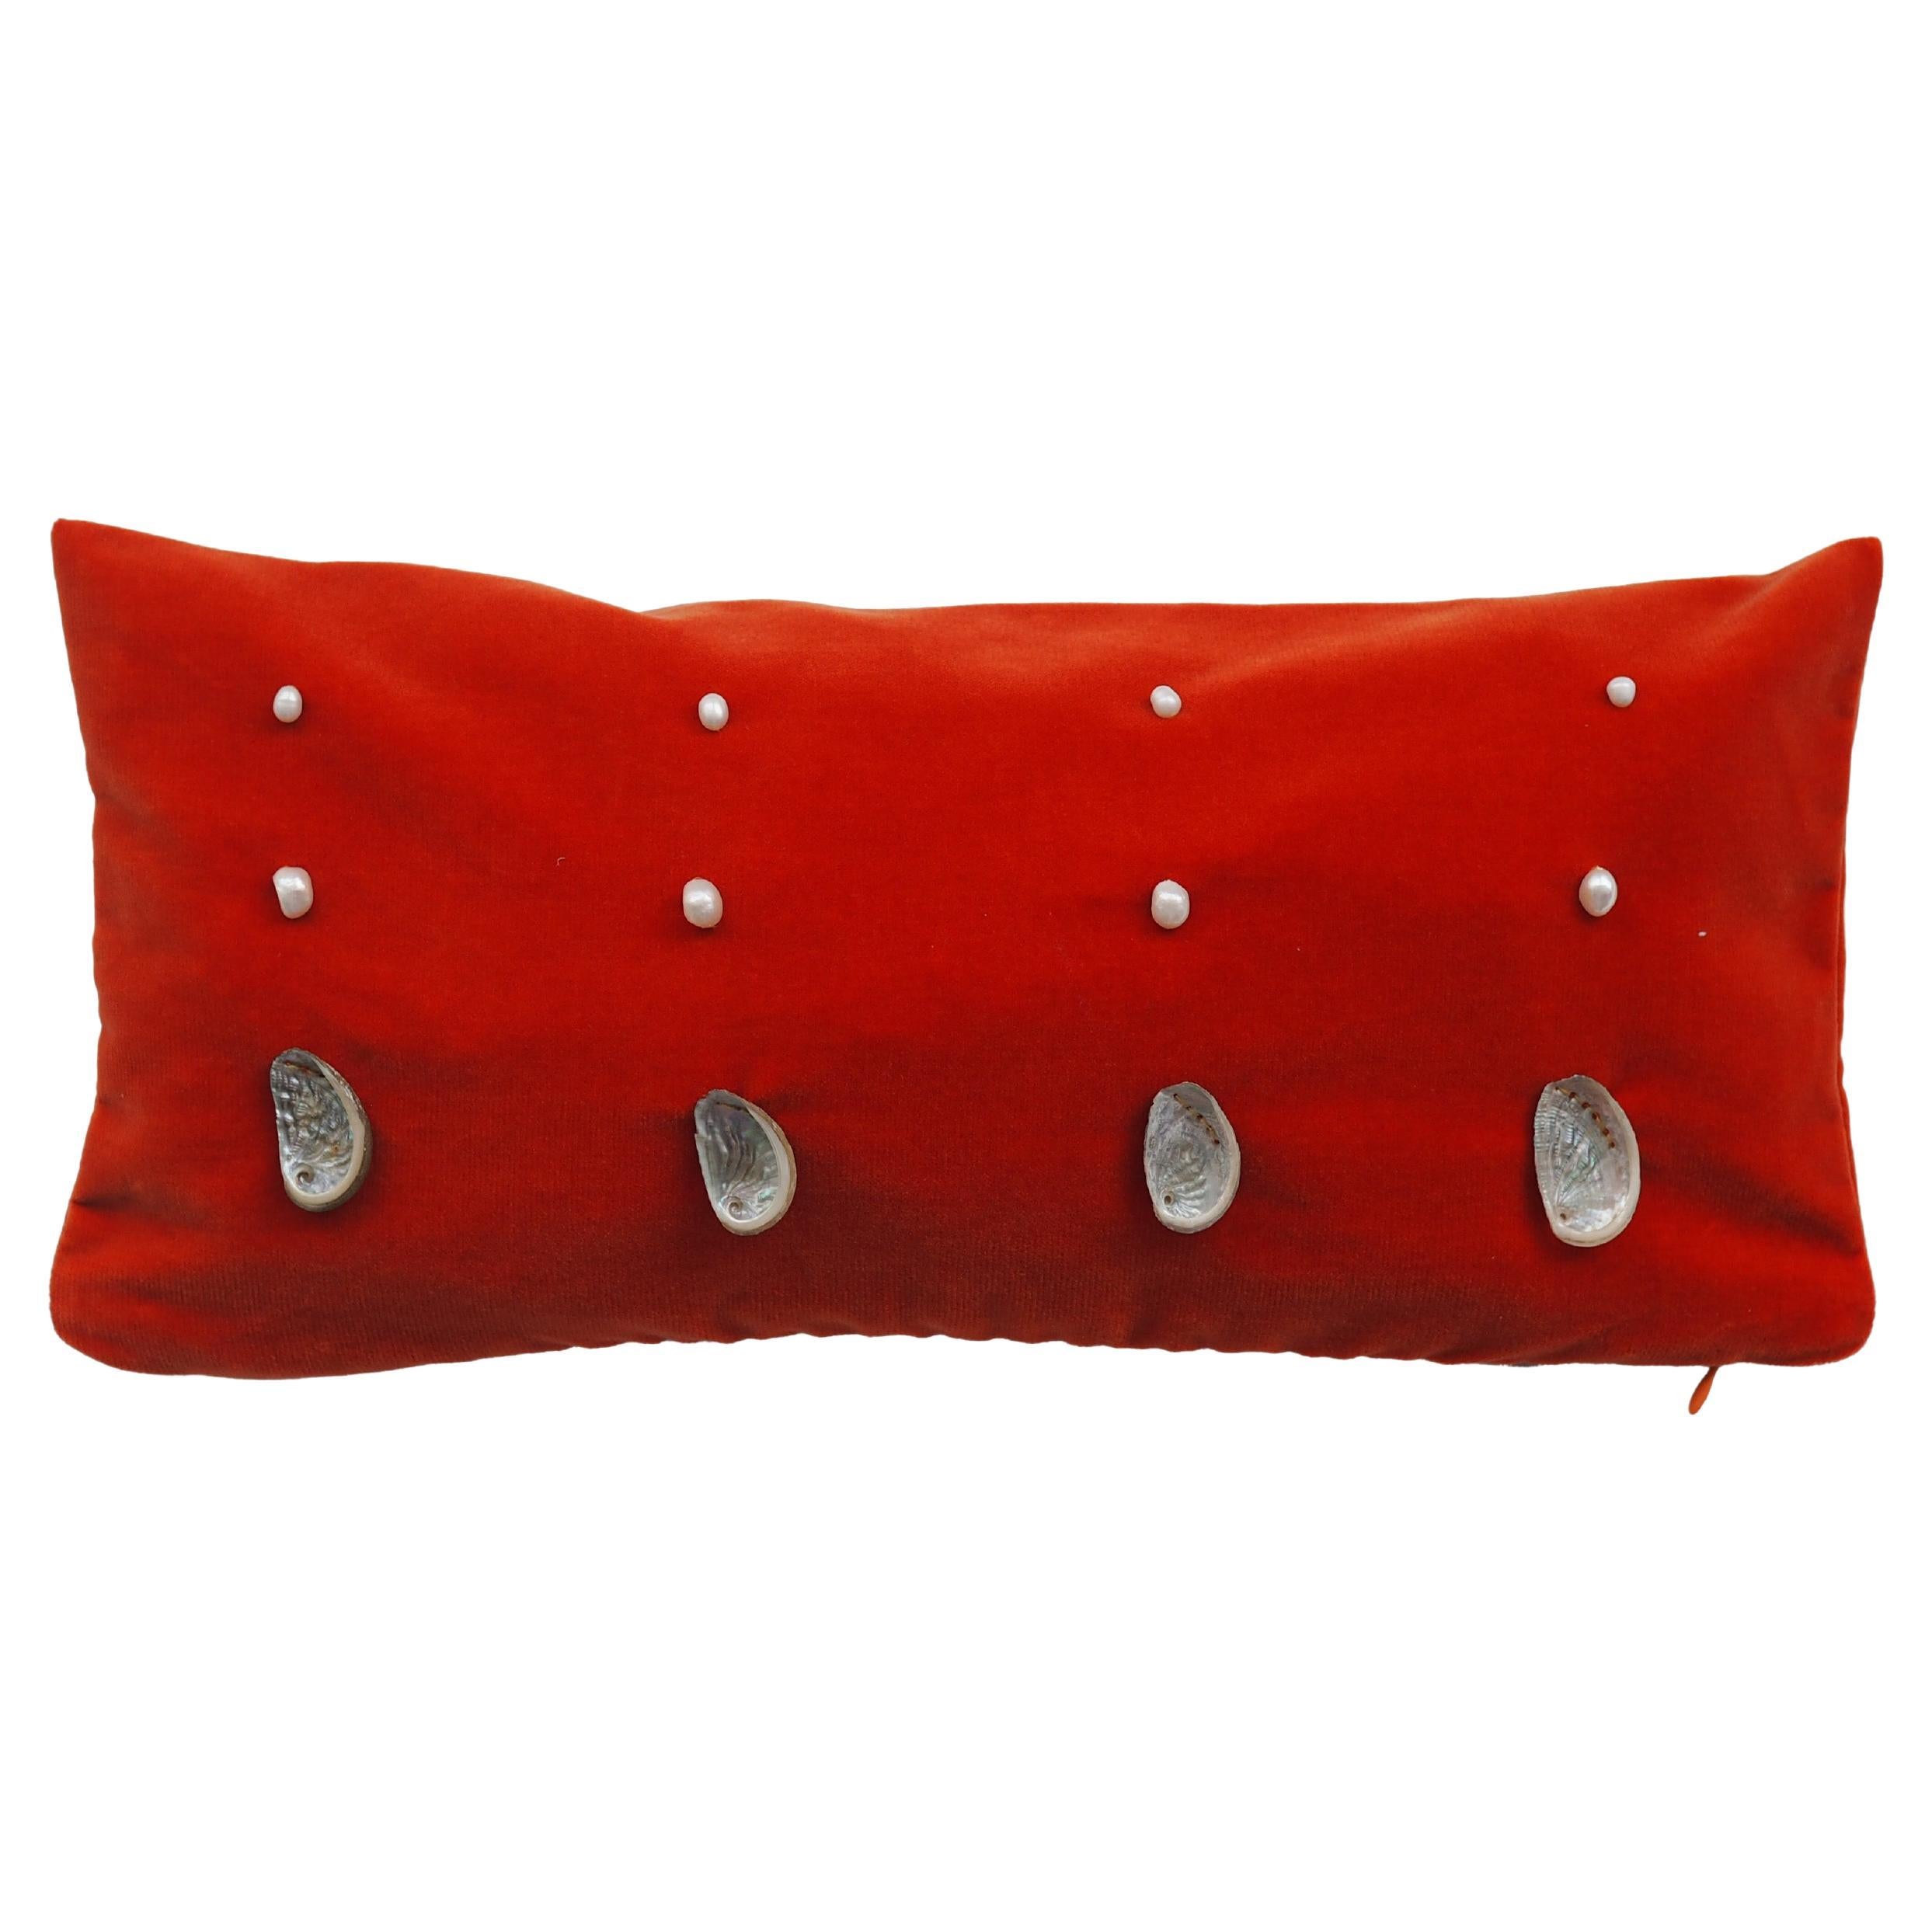 Bon Appetit 014 Decorative Cushion Culto Ponsoda 21st century desingn